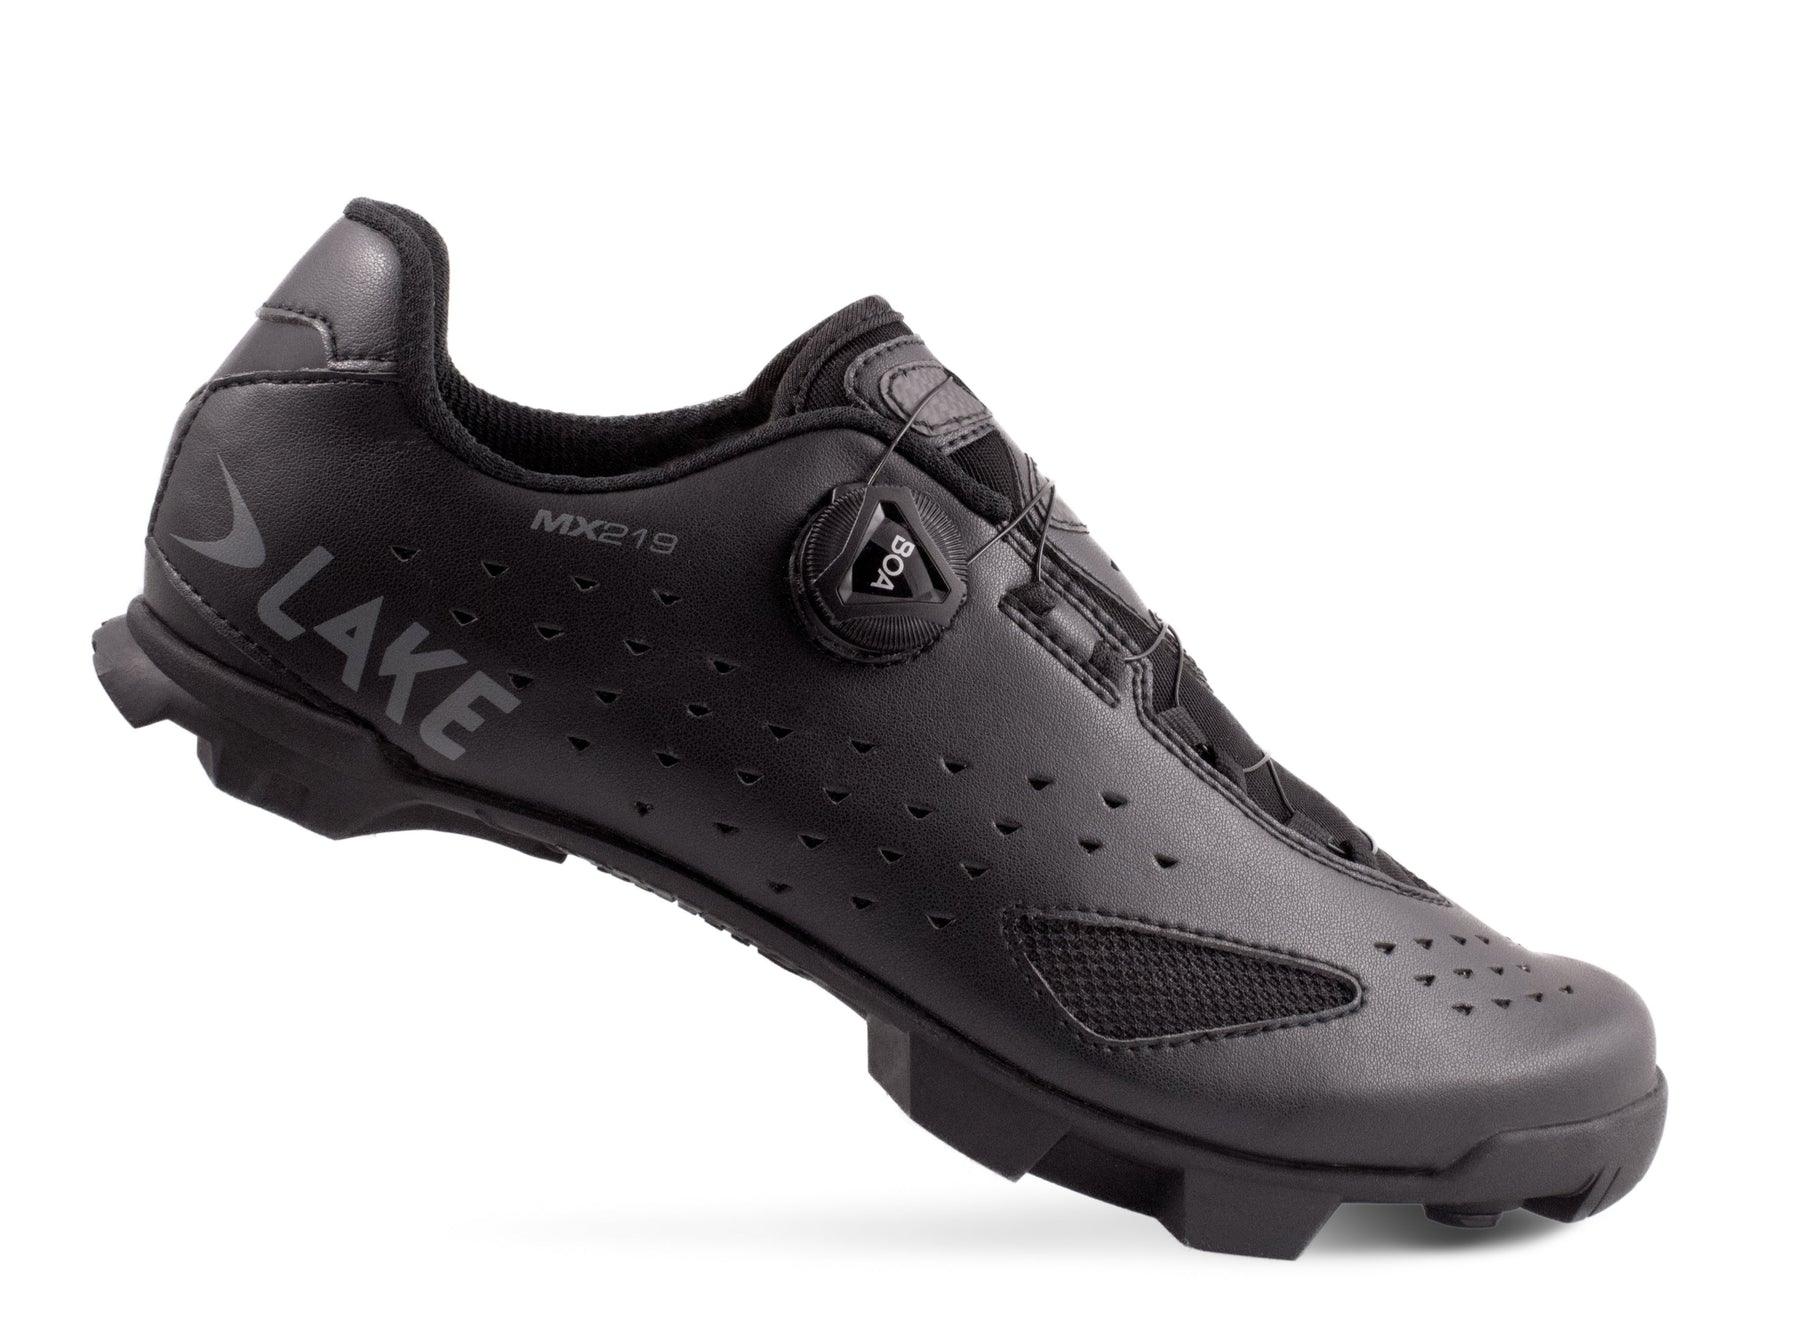 Lake Cycling MX219 Mountain Bike Shoe